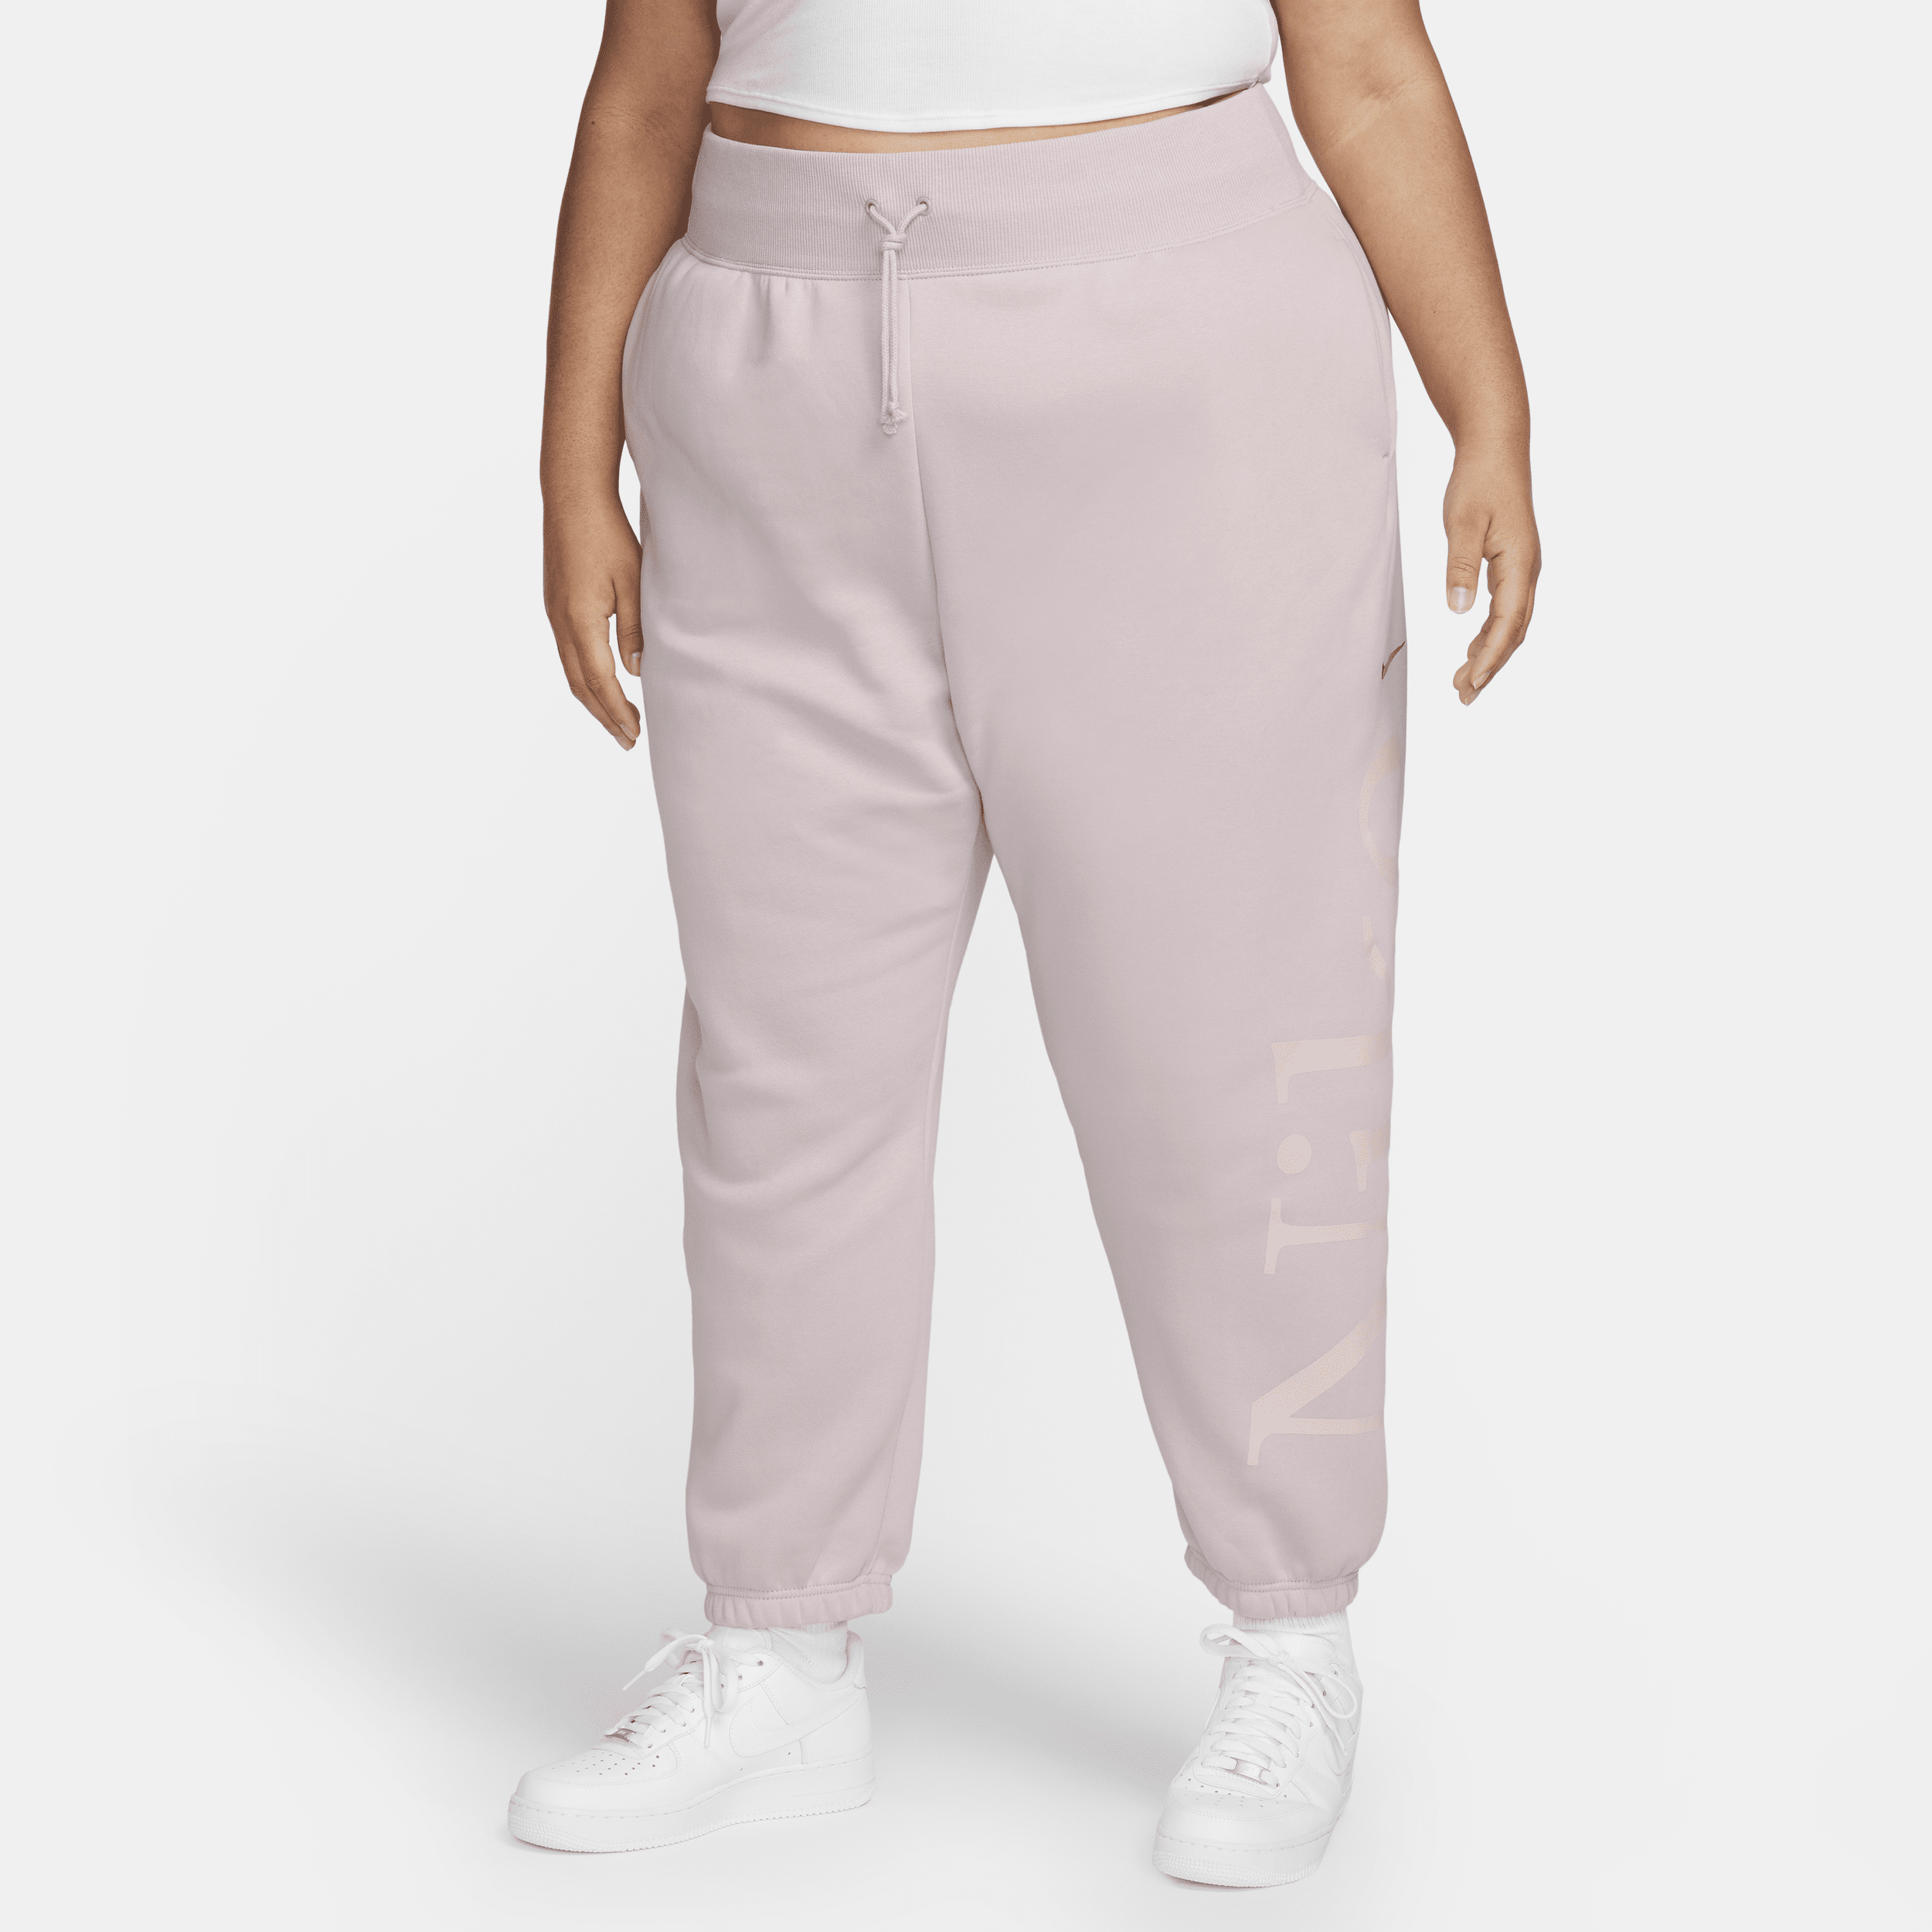 Pantaloni tuta oversize con logo Nike Sportswear Phoenix Fleece – Donna - Viola